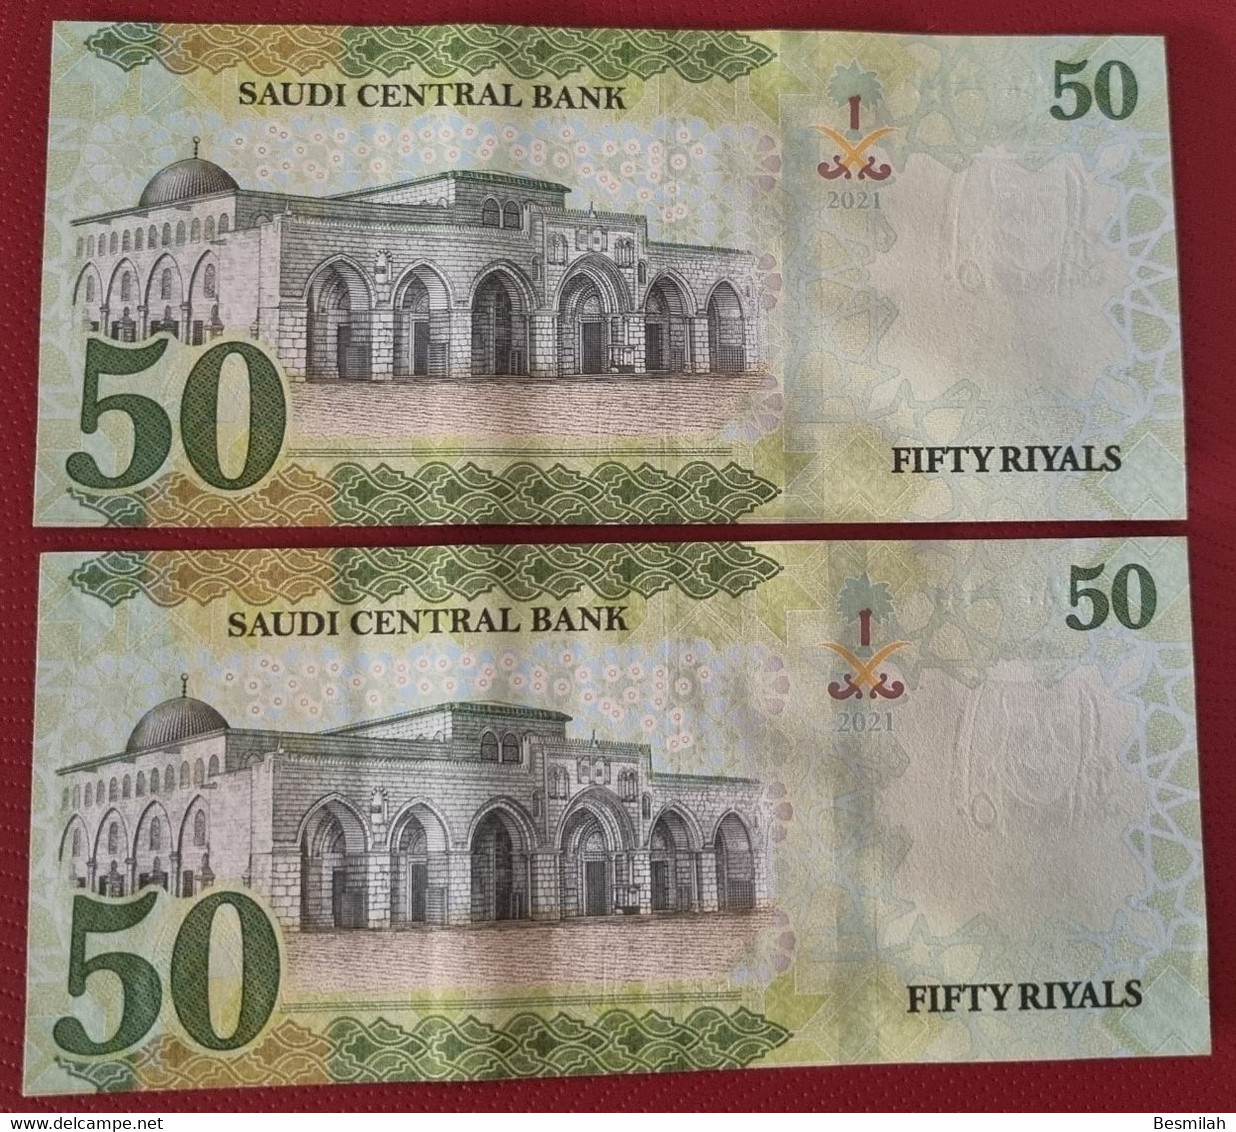 Saudi Arabia 50 Riyals 2021 (1442 Hijry) P-40 C UNC Two Notes From A Bundle New Name Saudi Central Bank - Arabie Saoudite